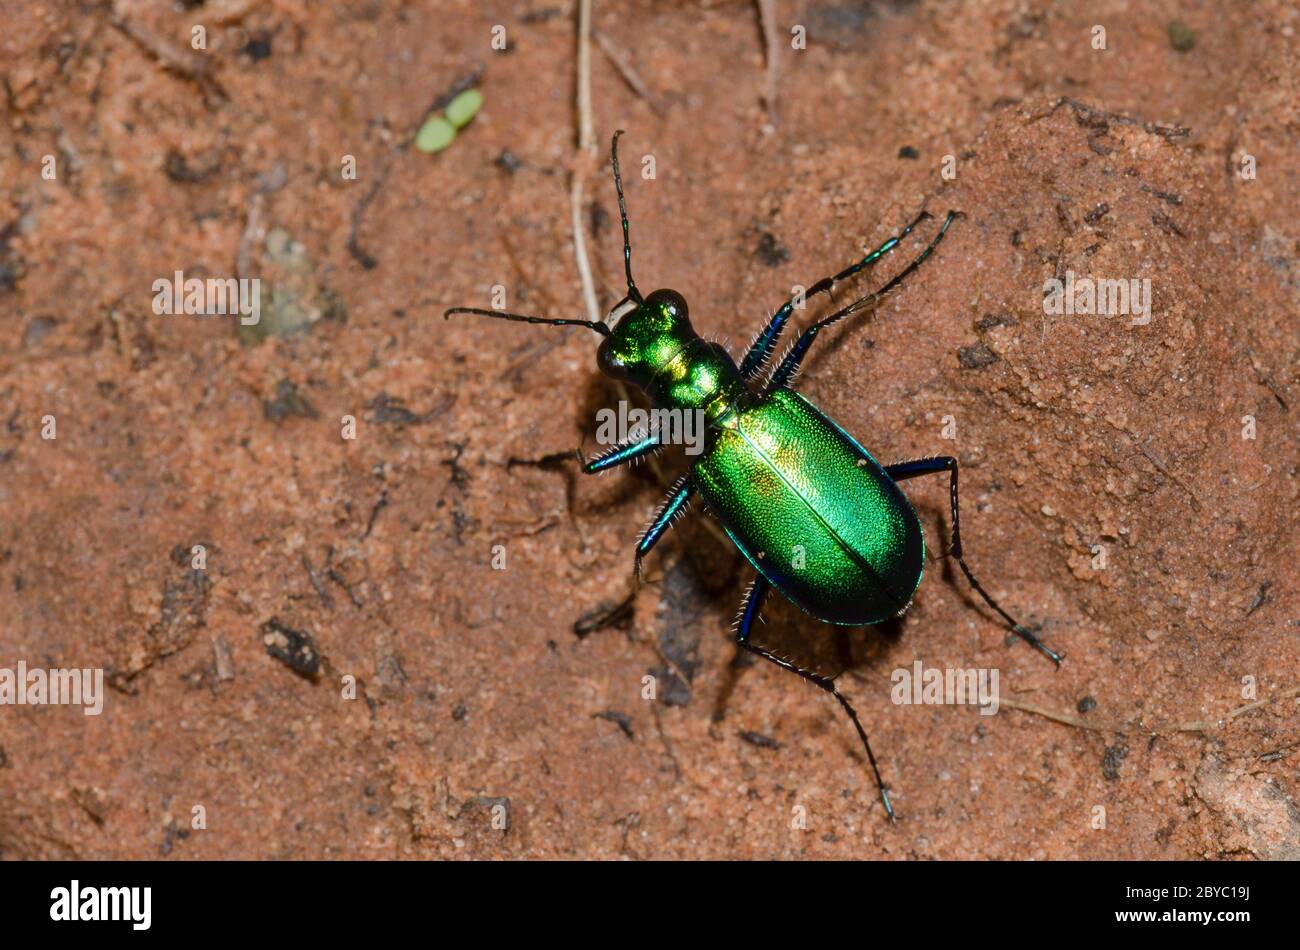 Six-Spotted Tiger Beetle, Cicindela sexguttata Stock Photo